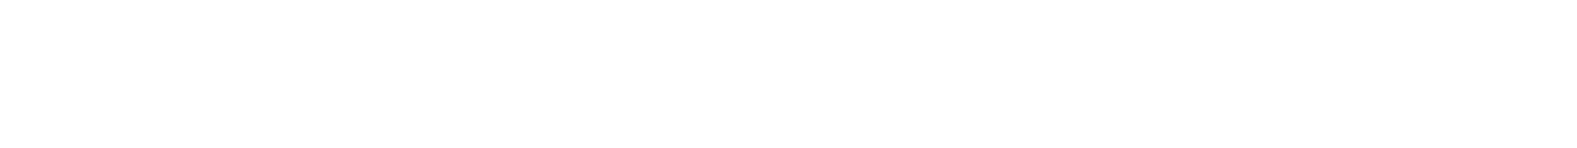 Johnson & Johnson logo large for dark backgrounds (transparent PNG)